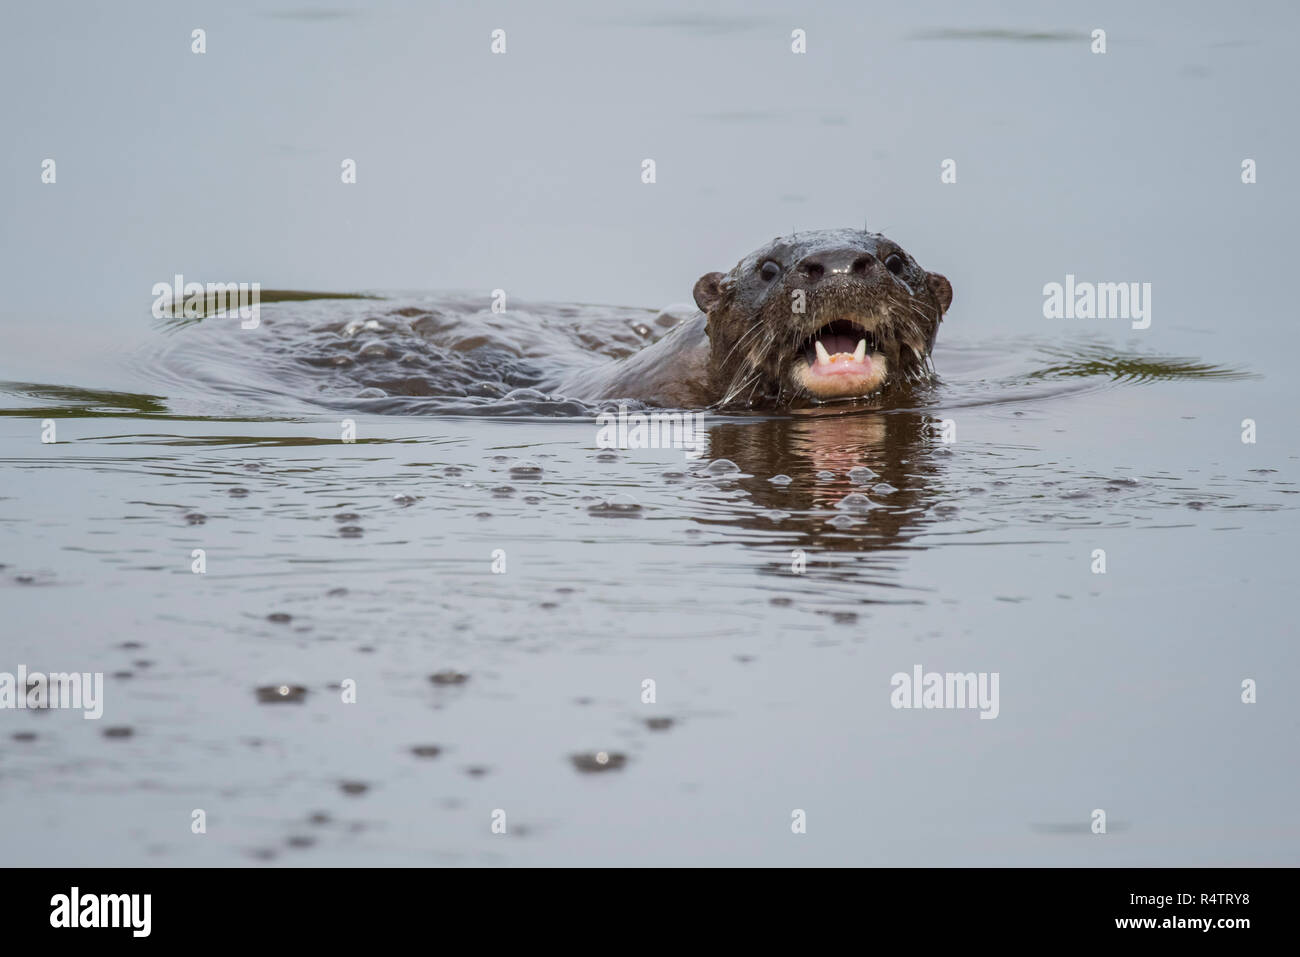 Neotropical otter (Lontra longicaudis), swimming in water, Pantanal, Mato Grosso do Sul, Brazil Stock Photo